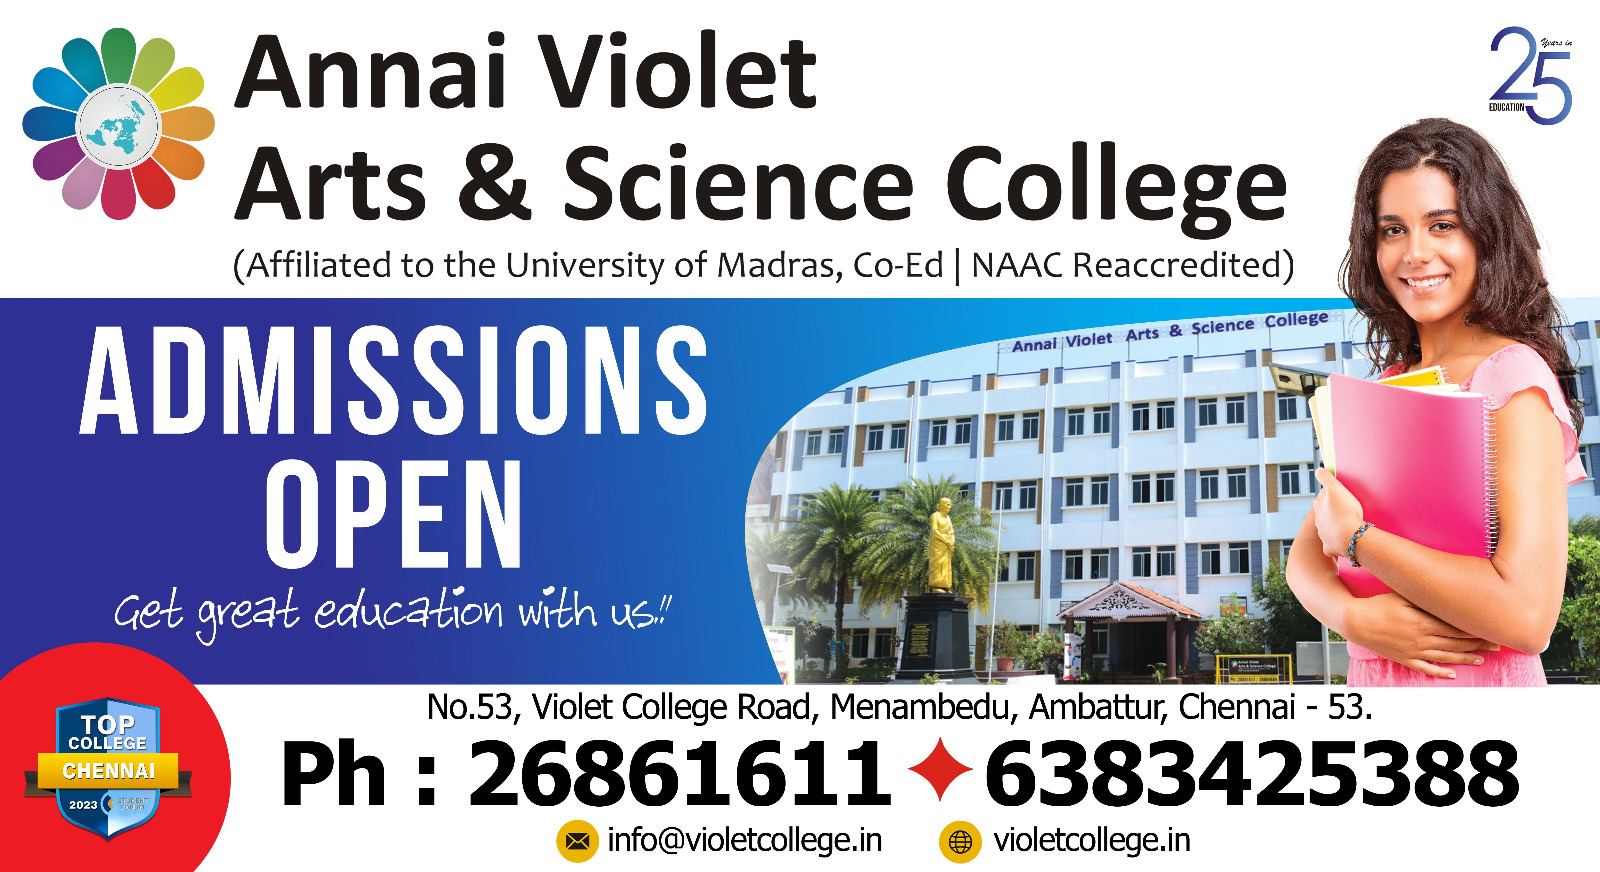 Annai Violet Arts & Science College